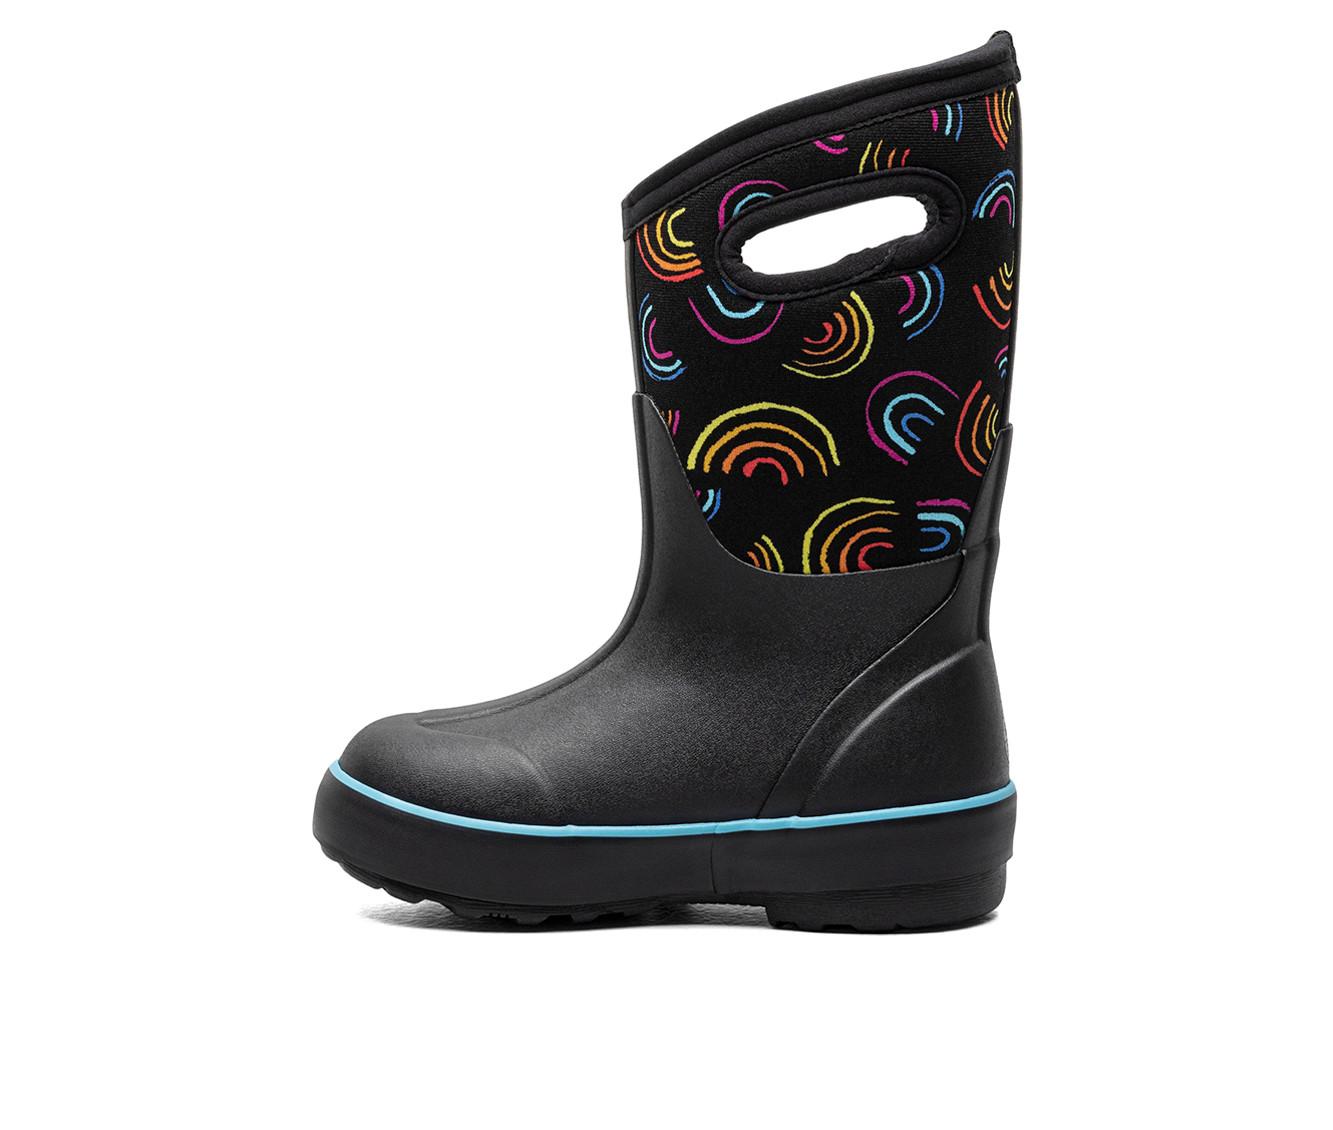 Kids' Bogs Footwear Toddler & Little Kid Classic II Wild Rainbow Winter Boots